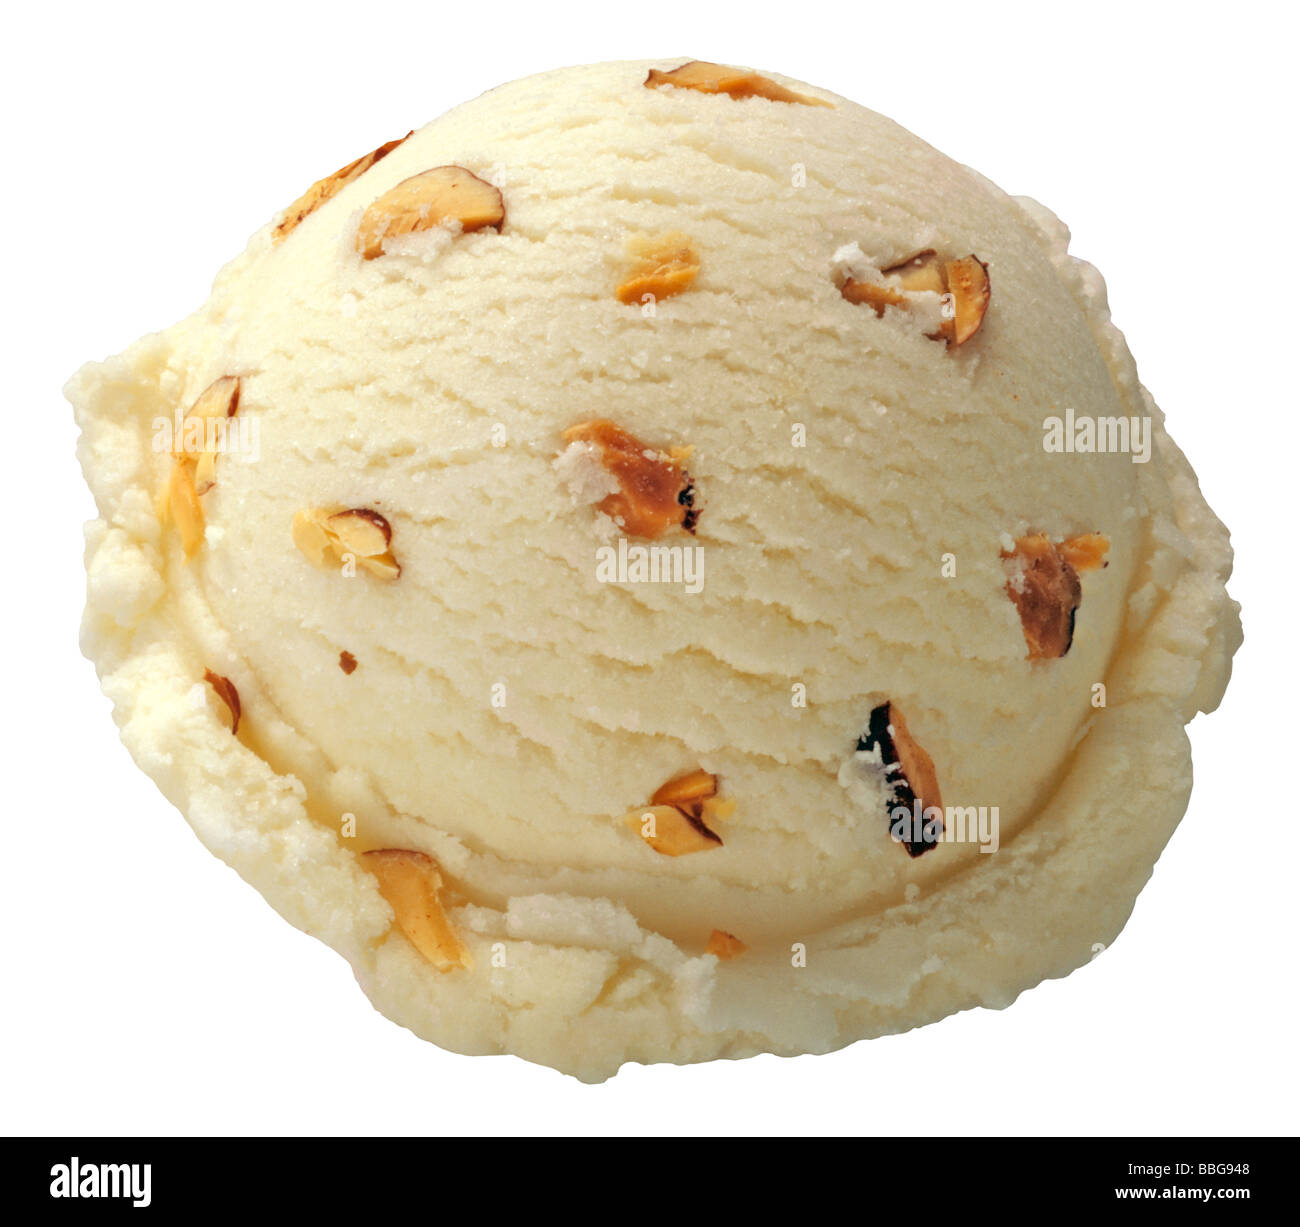 A scoop of vanilla with almonds ice cream Stock Photo